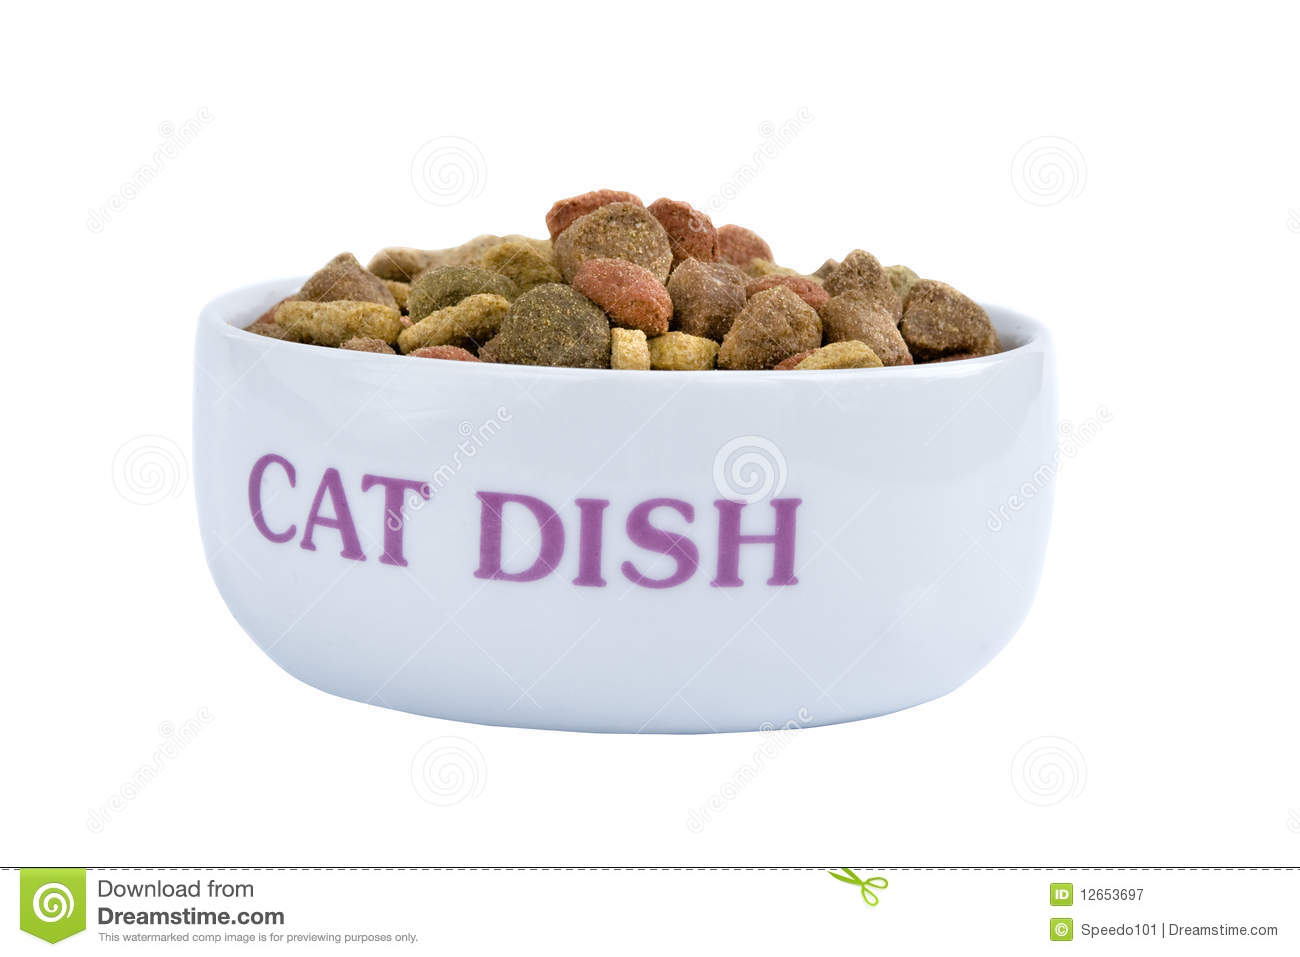 Cat Dish Royalty Free Stock Photography   Image  12653697